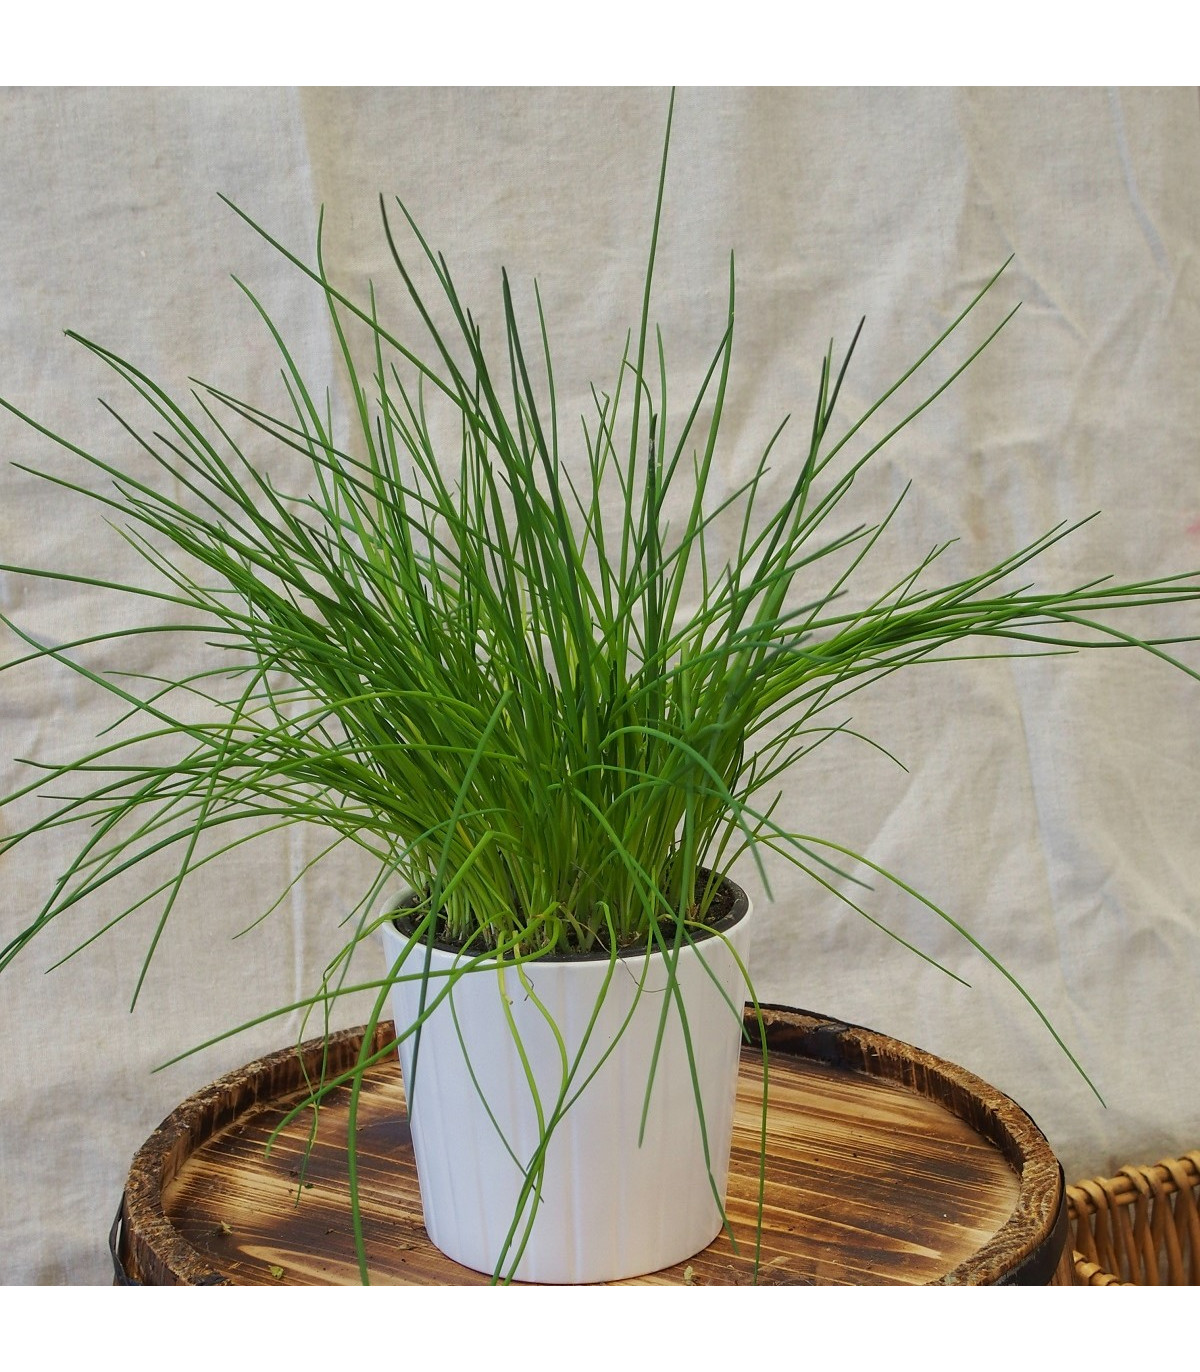 Pažitka pražská - Allium schoenoprasum L. - osivo pažitky - 750 ks